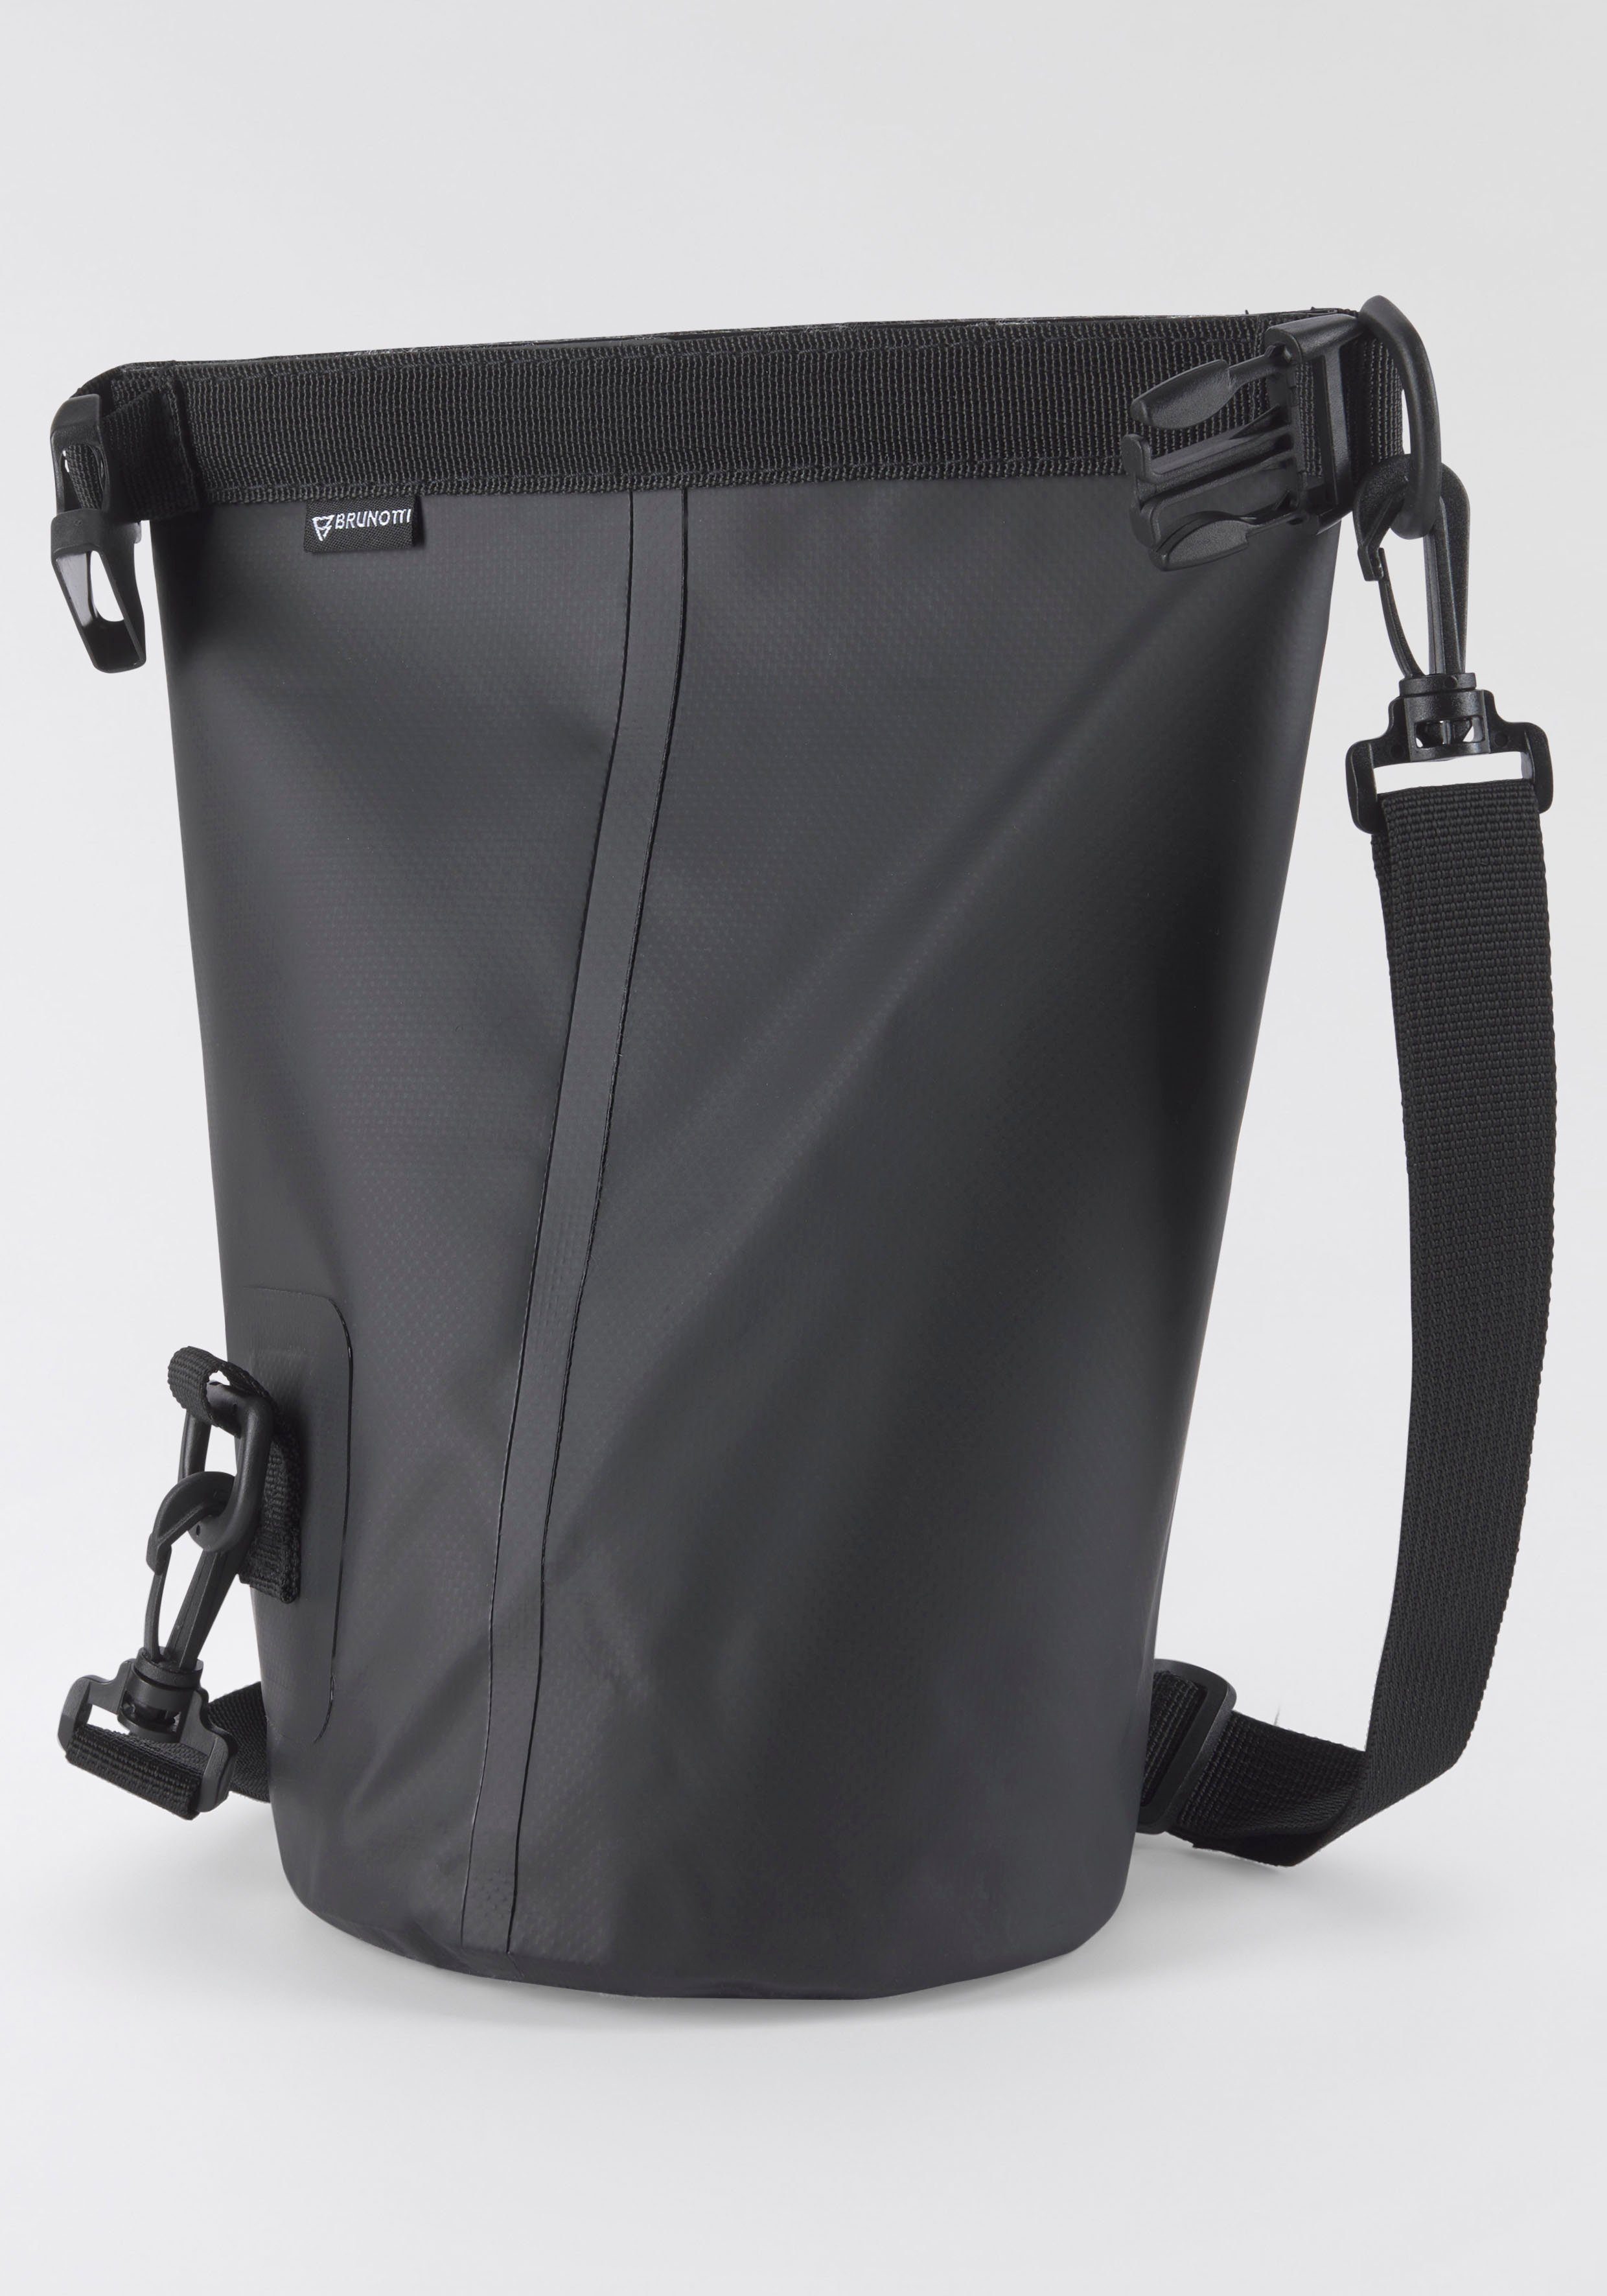 Sporttasche Drybag-3L Bag Unisex Brunotti